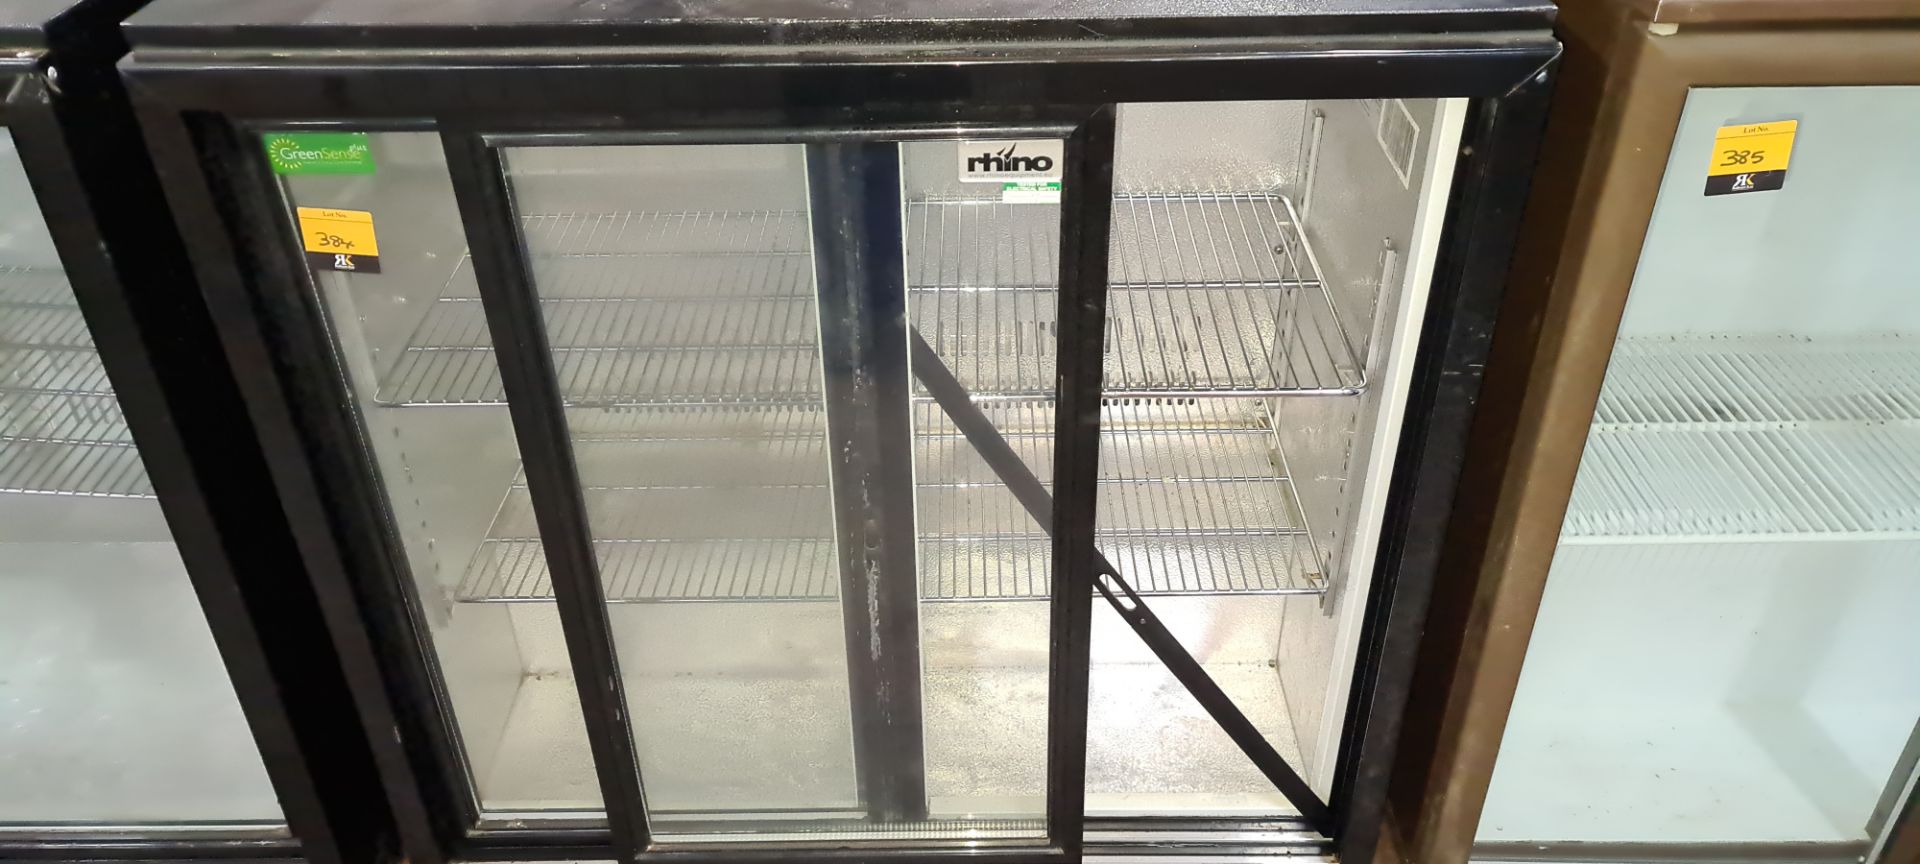 Rhino twin clear sliding door back bar/bottle fridge - Image 4 of 5